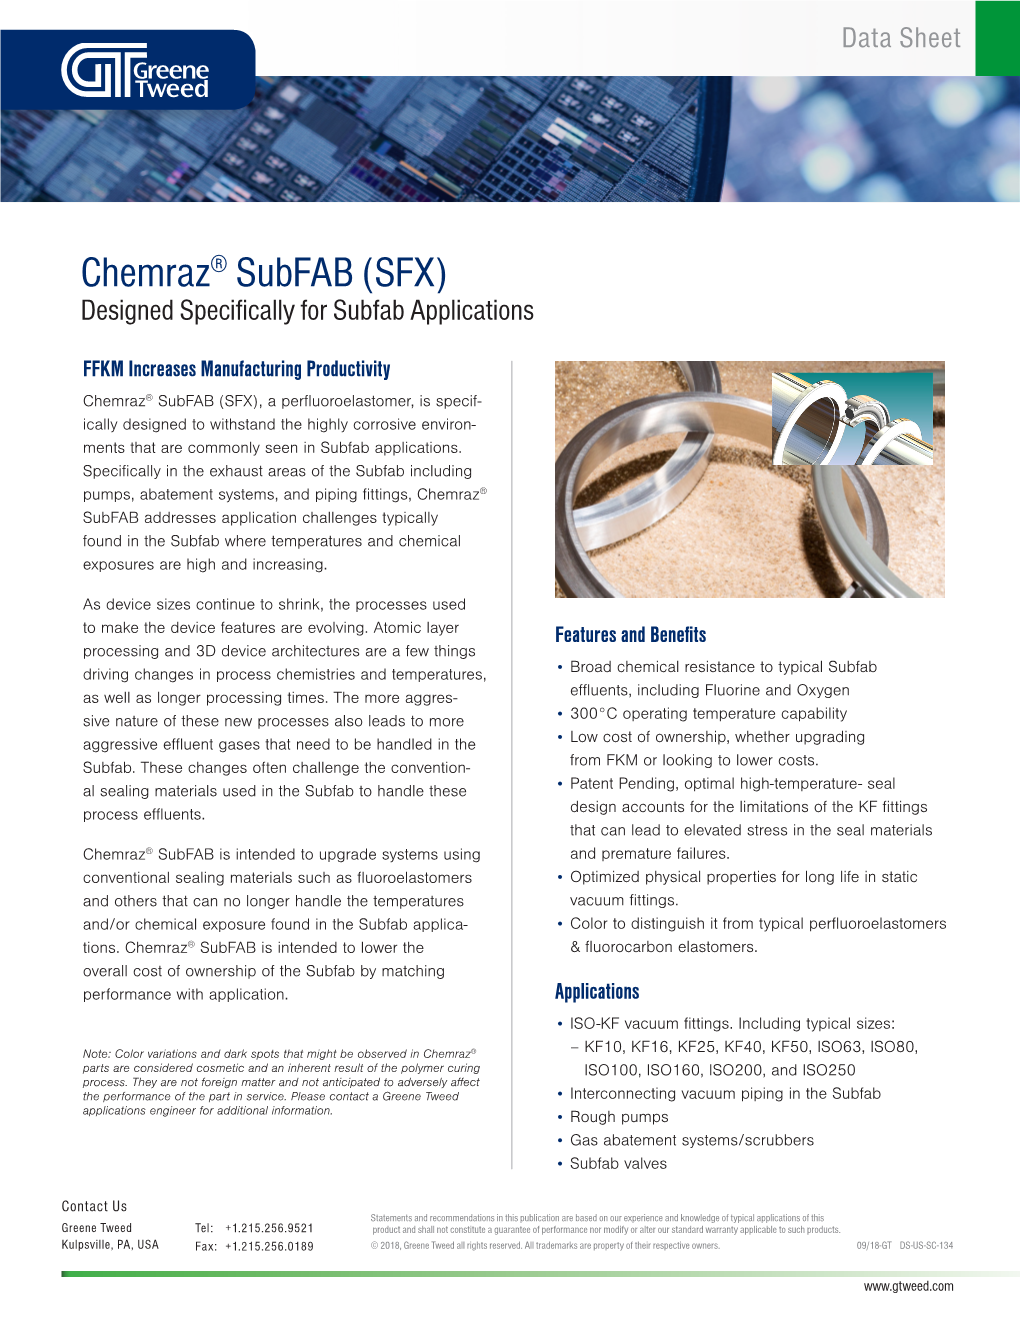 Chemraz® Subfab (SFX) Designed Specifically for Subfab Applications